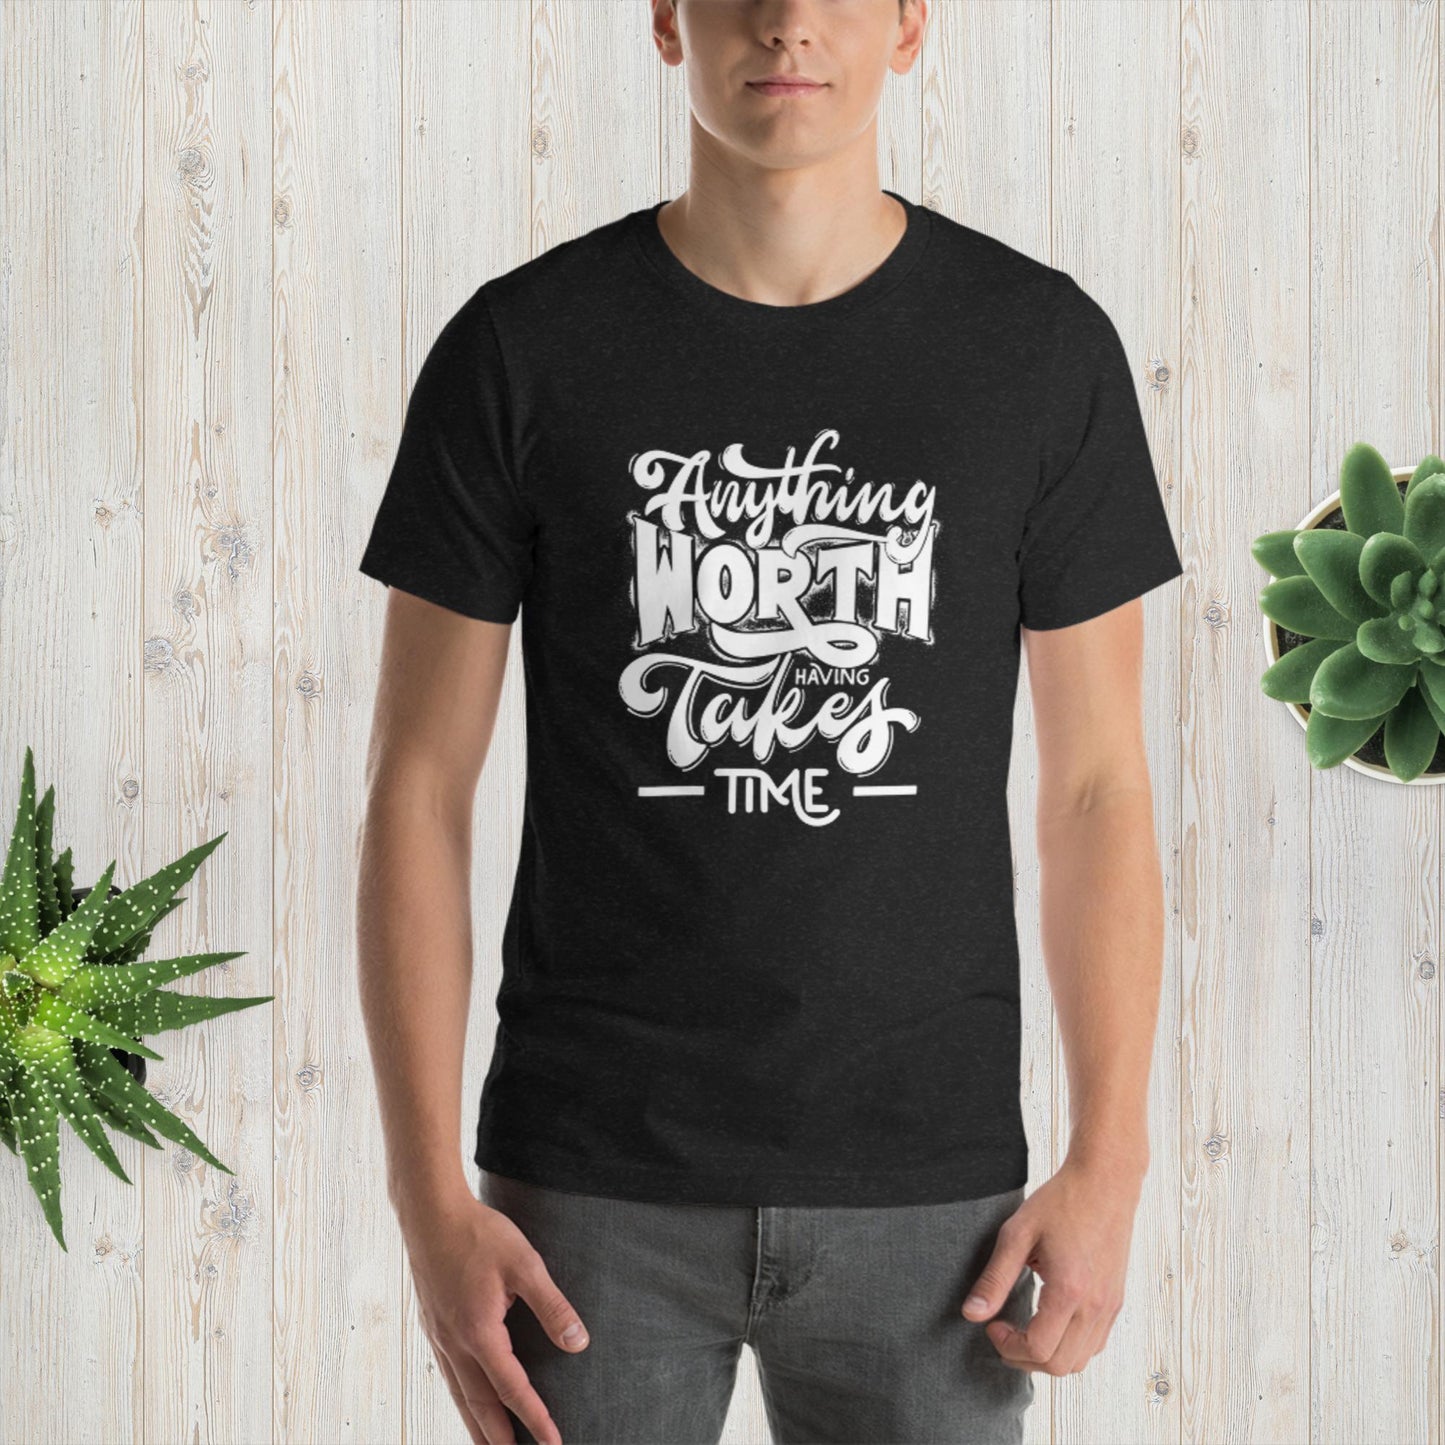 Anything Worth Having Takes Time - Unisex t-shirt